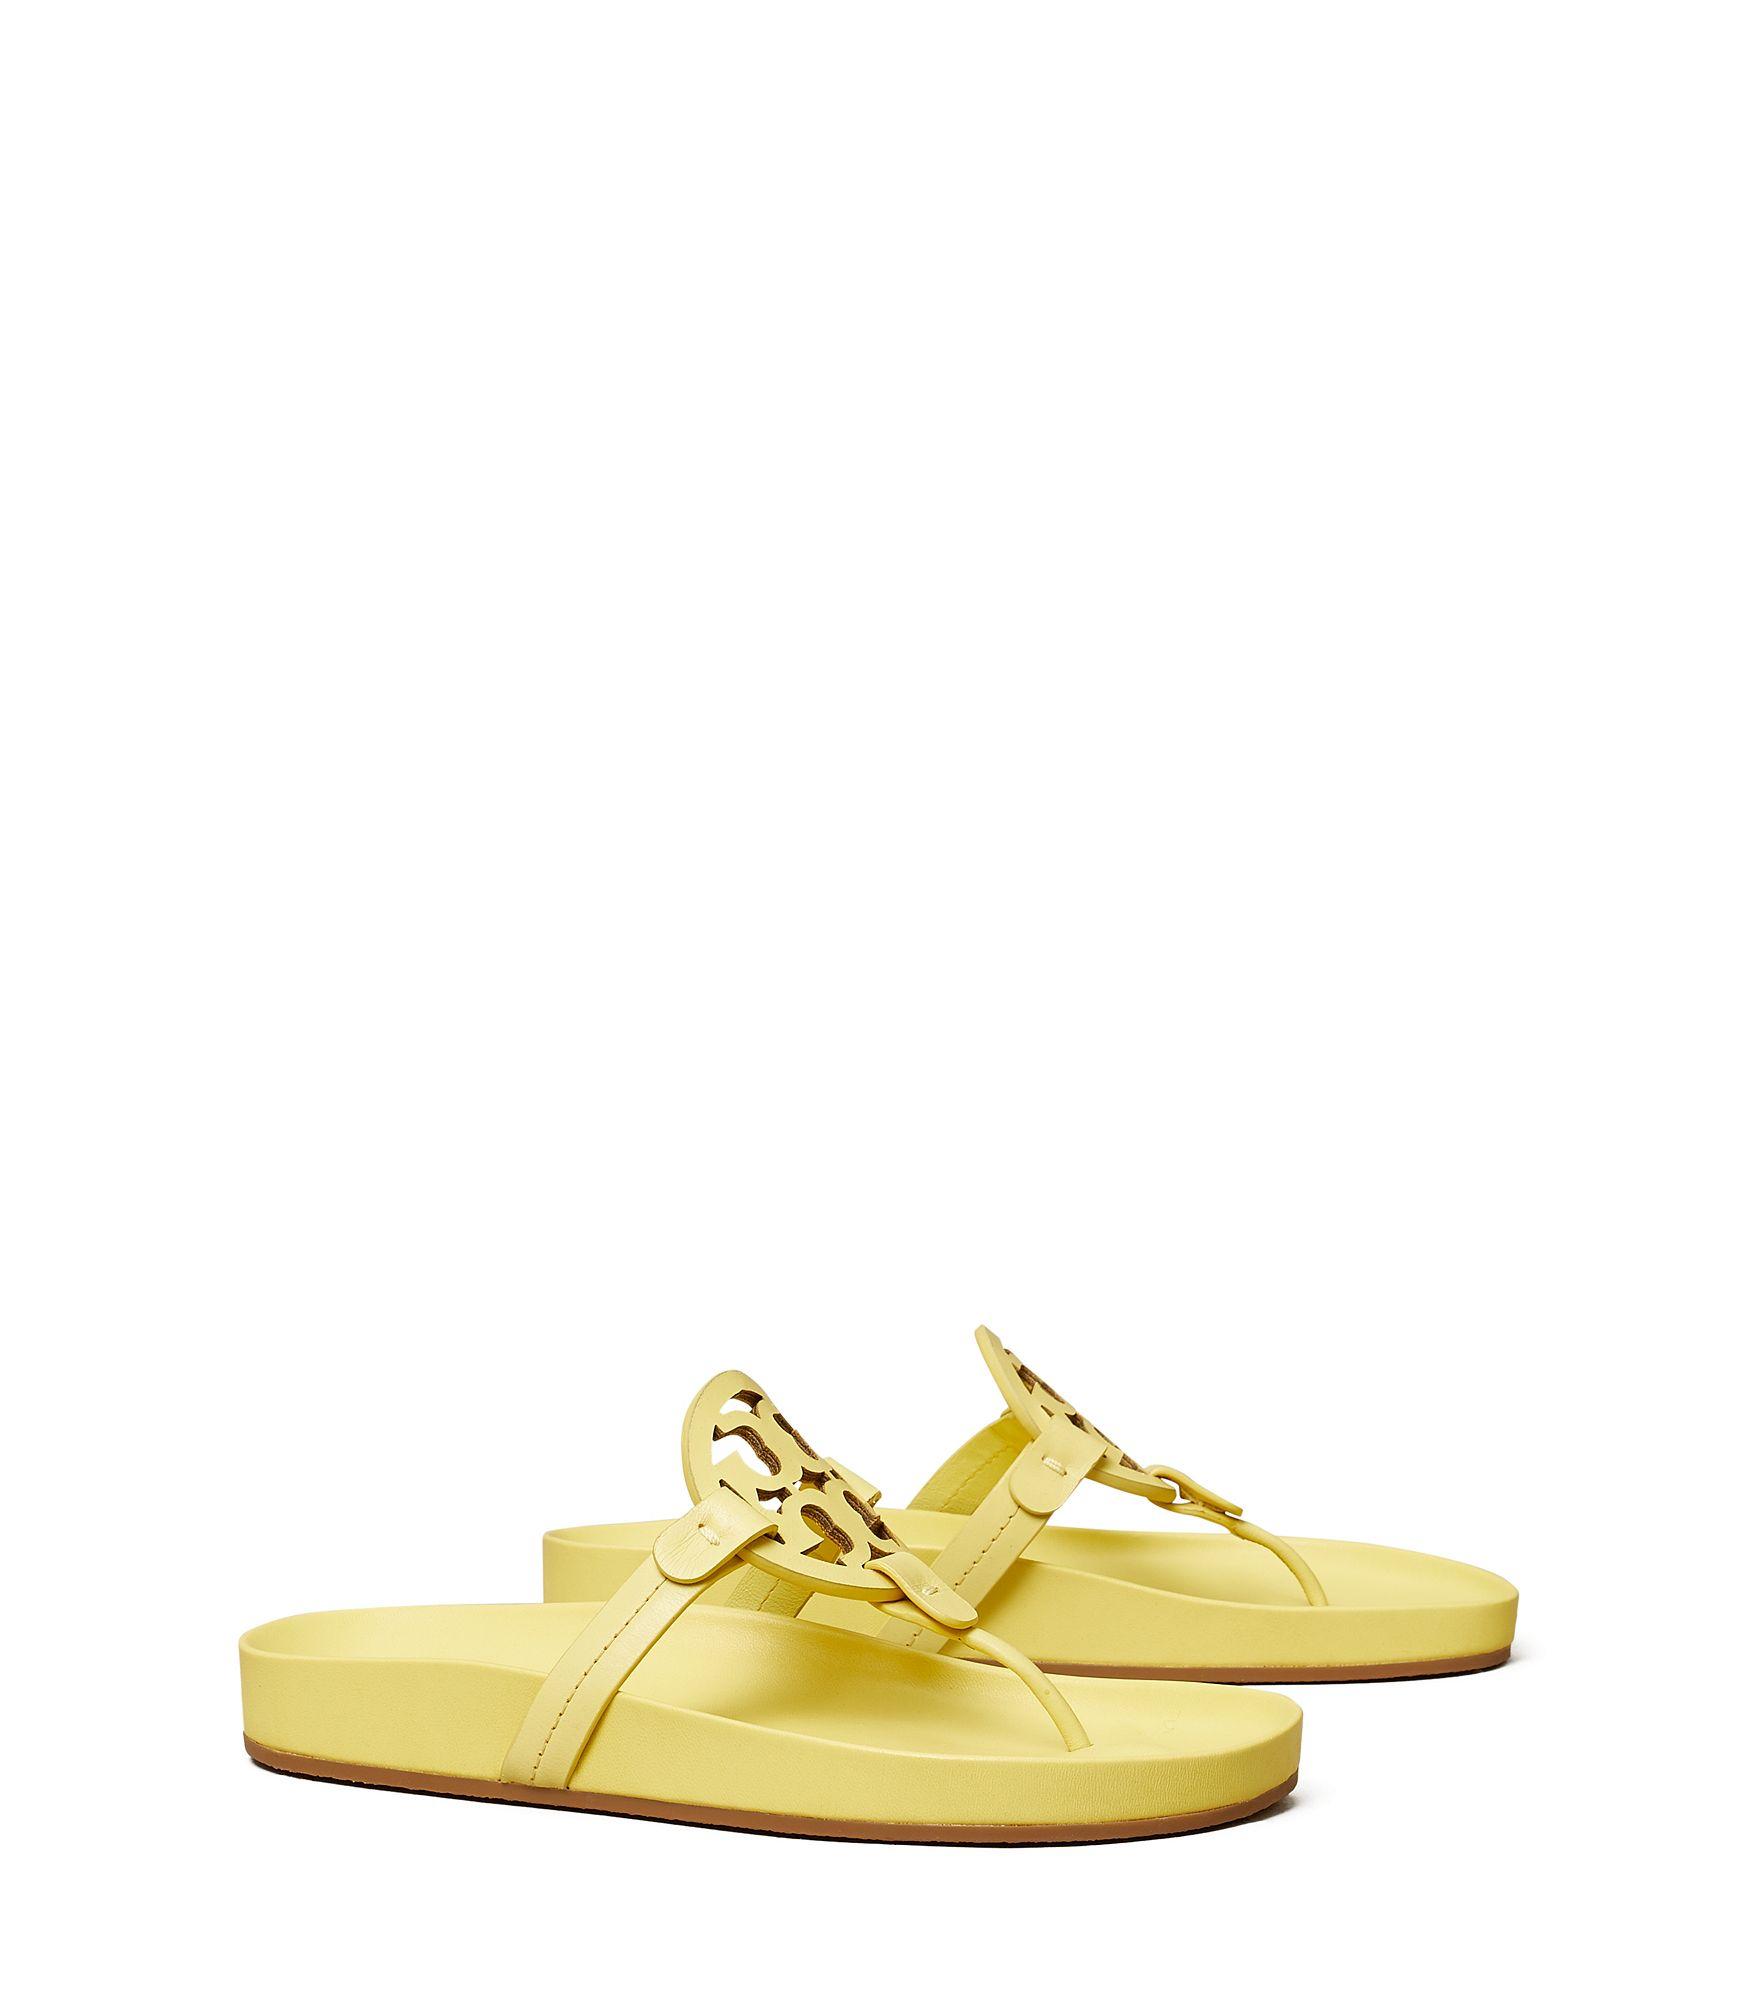 Buy Tory Burch Laser-Cut Miller Flat Sandals, Mustard Yellow Color Women